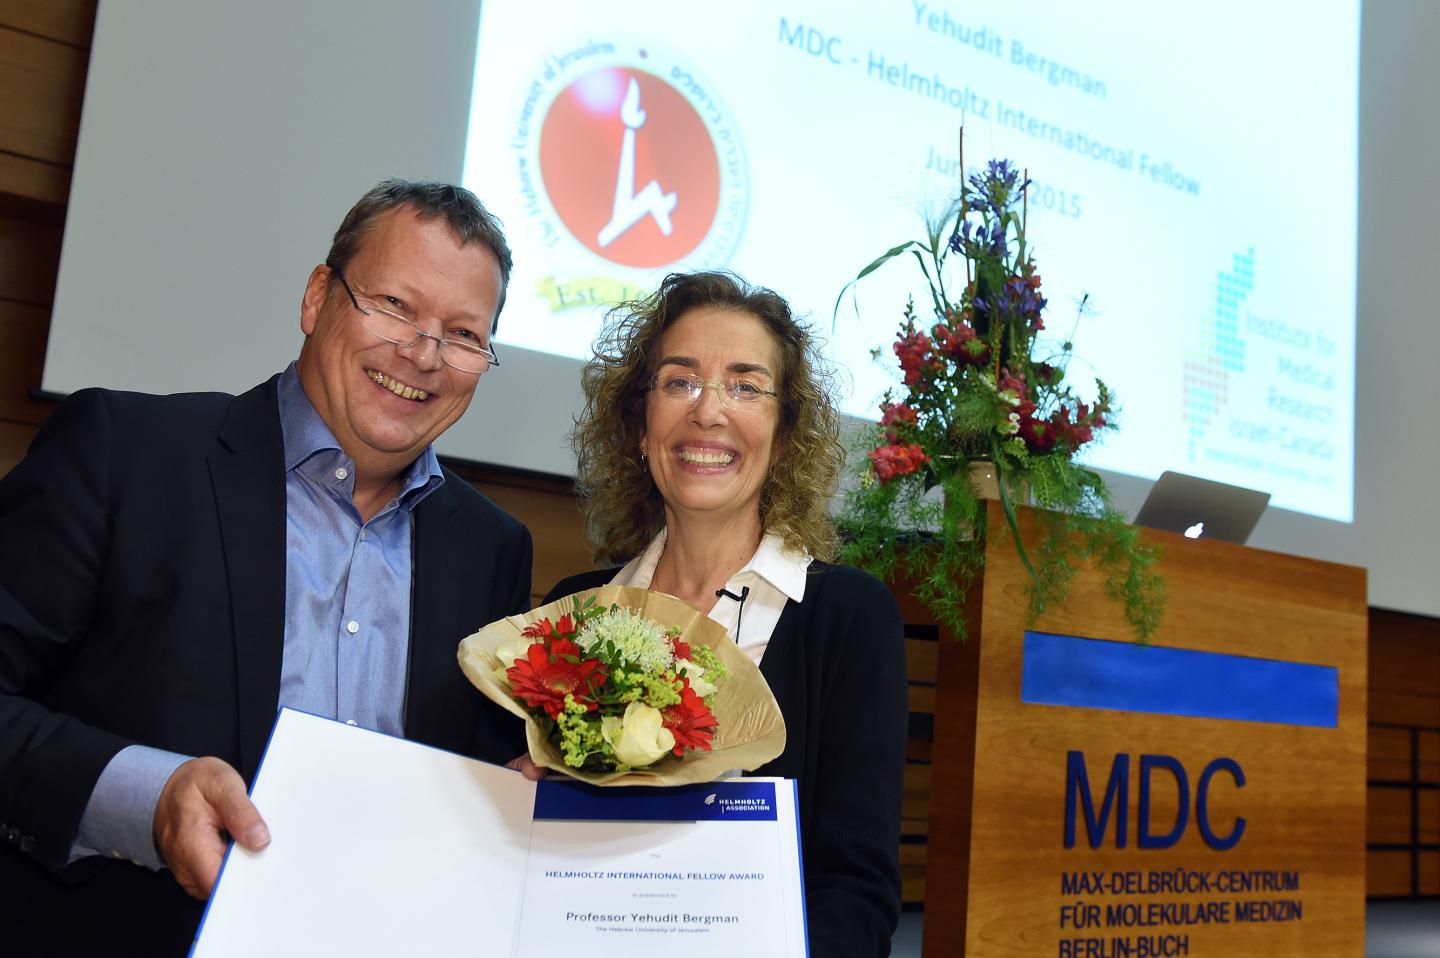 Helmholtz International Fellow Award for Professor Yehudit Bergman of the Hebrew University